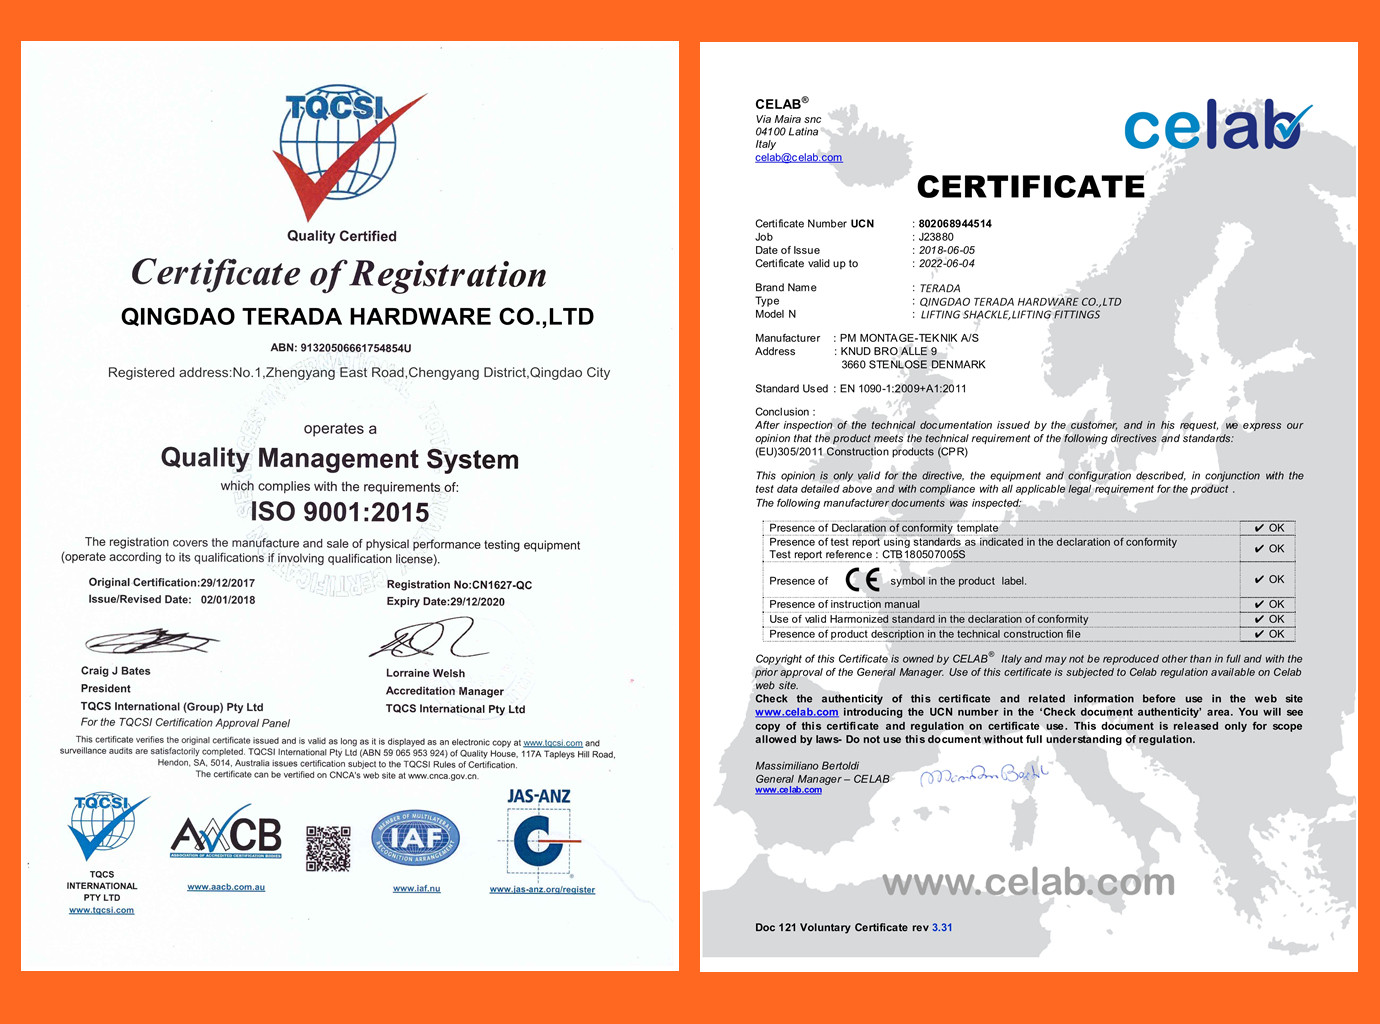 TERADE HARDWARE Certification ISO 9001:2015